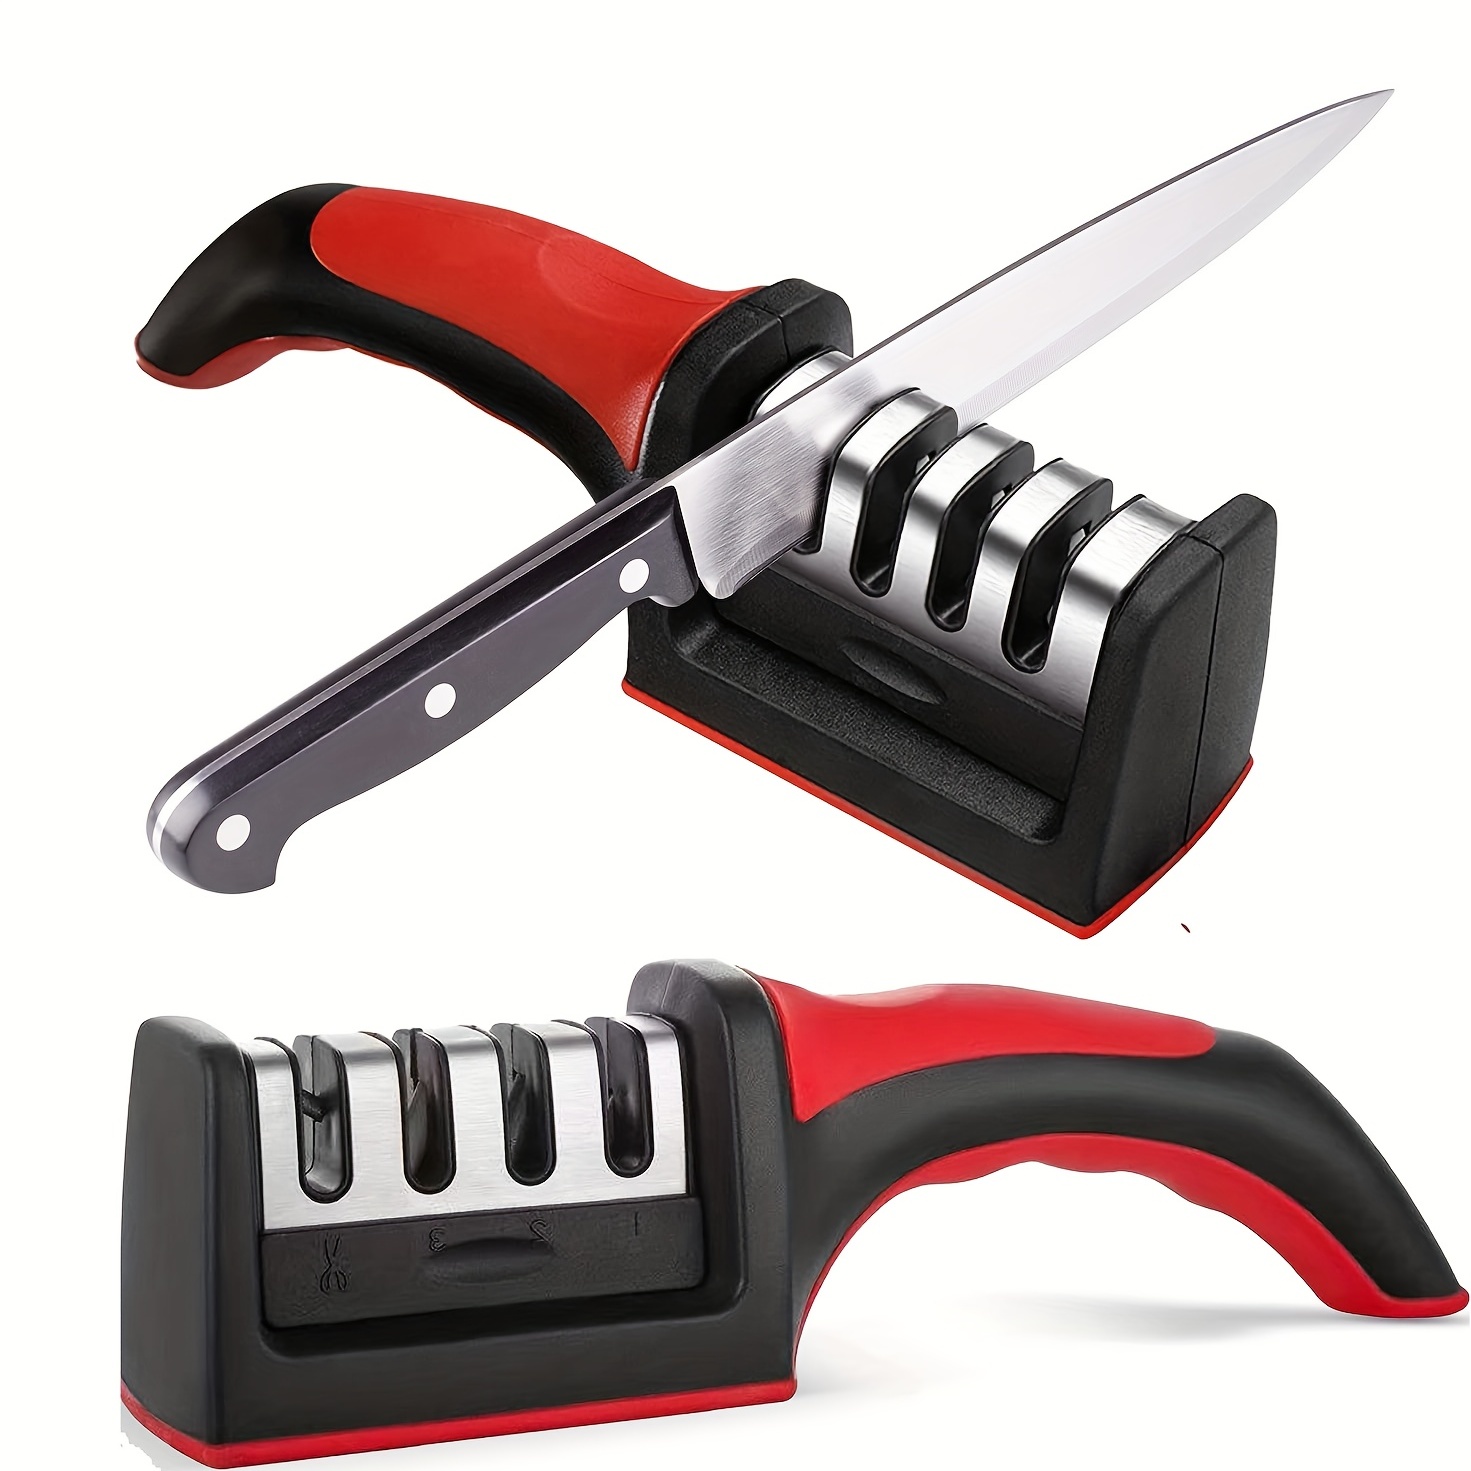 3 Slot Knife Sharpener, For Home & Kitchen